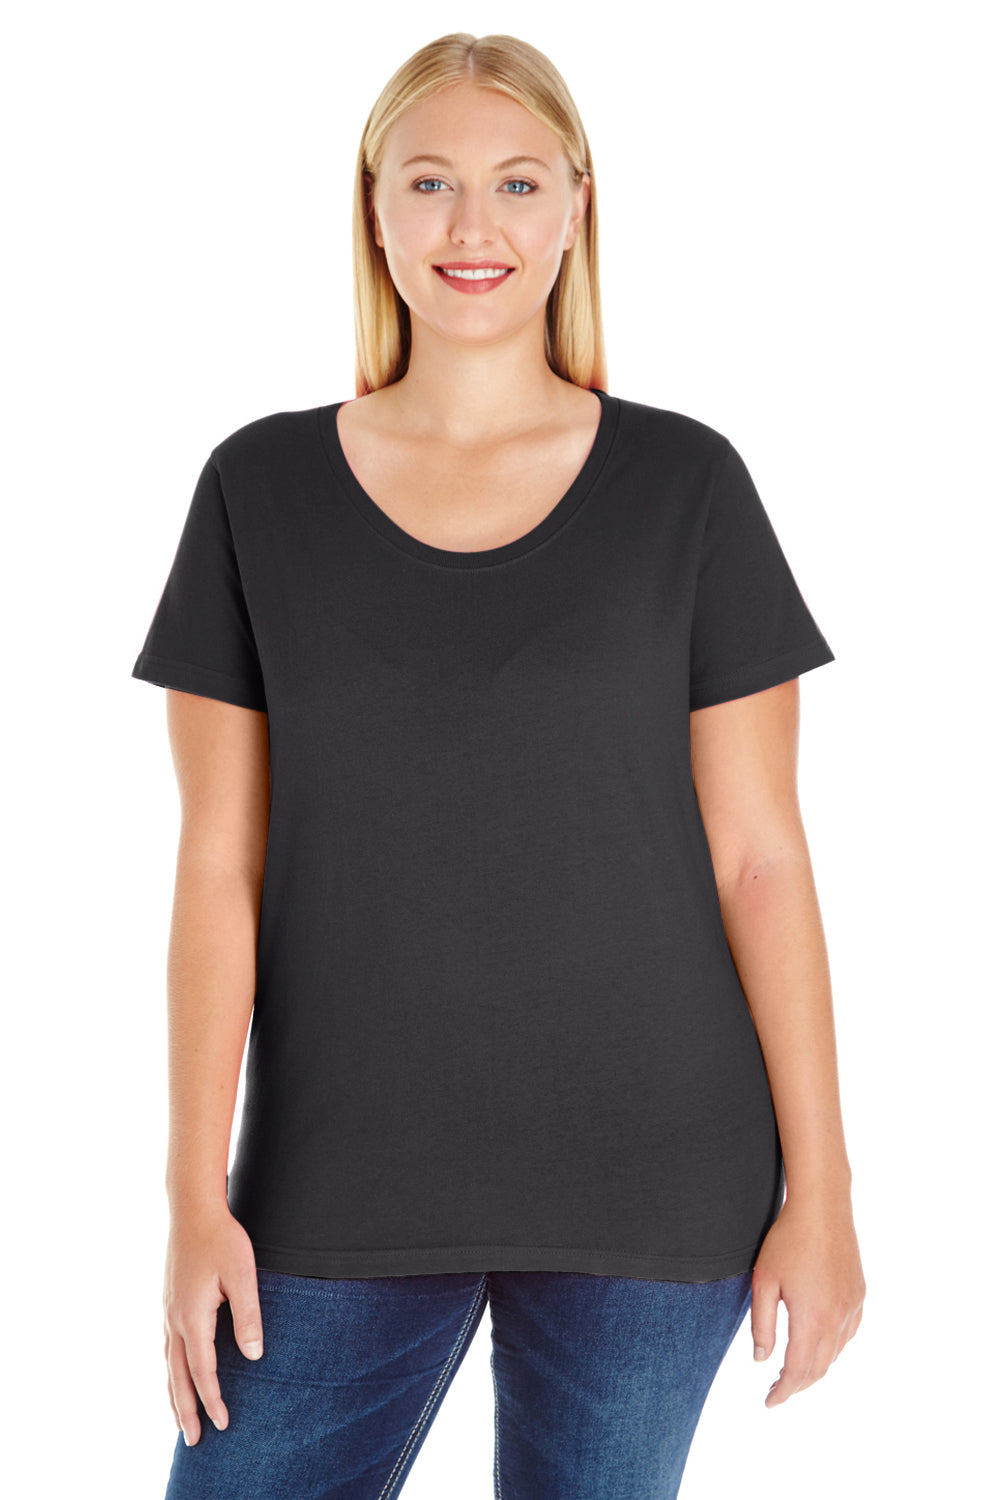 LAT 3804 Womens Premium Jersey Short Sleeve Scoop Neck T-Shirt Black Front